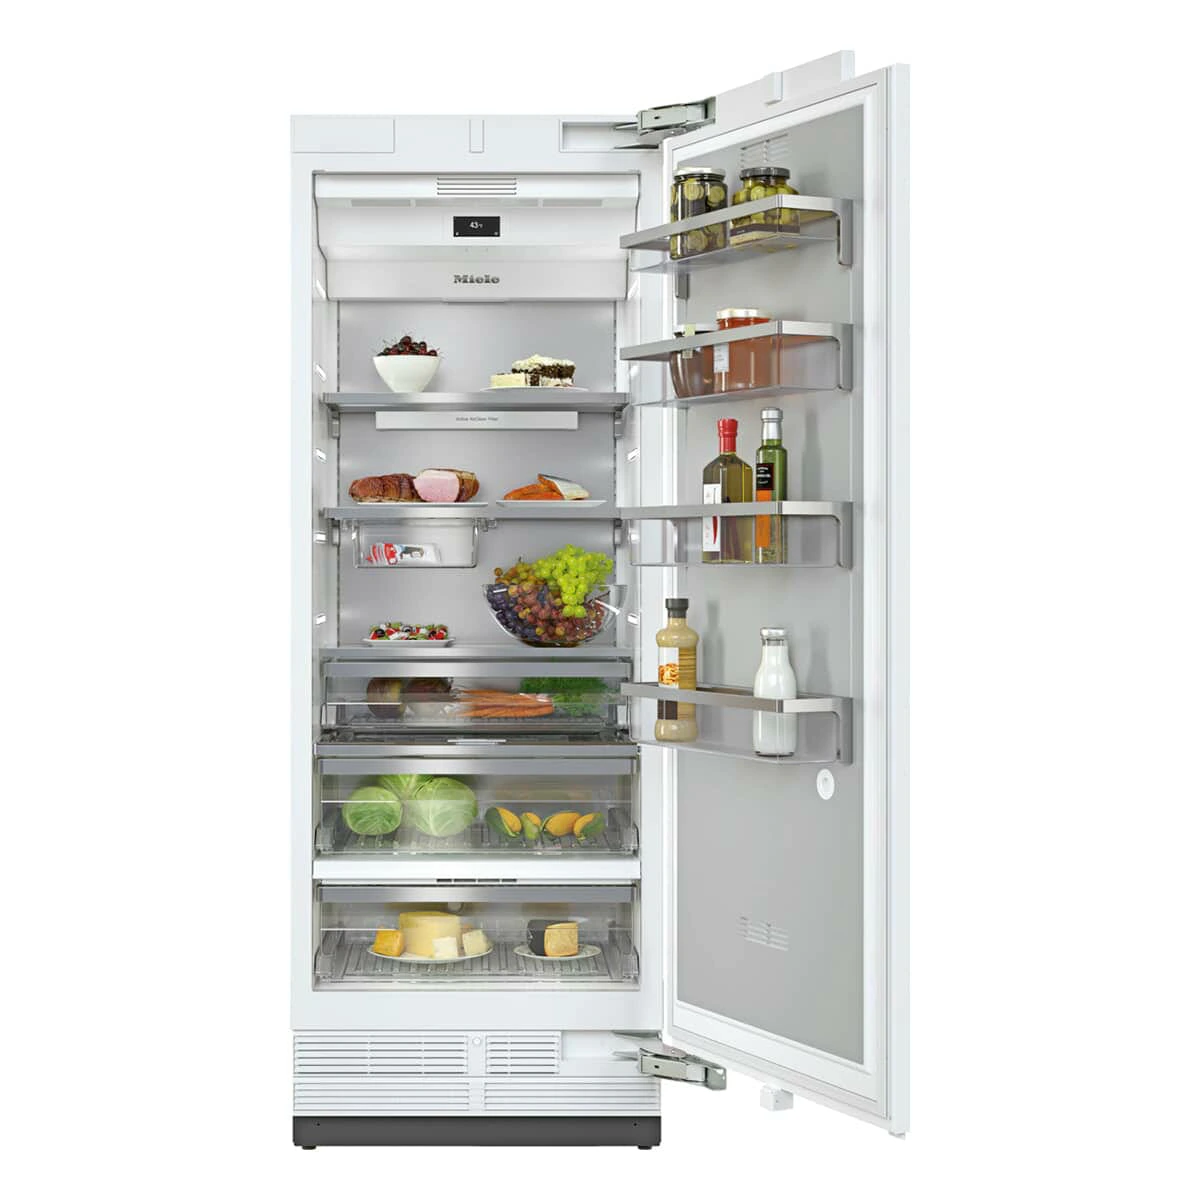 Tủ lạnh Miele MasterCool K 2802 Vi âm tủ